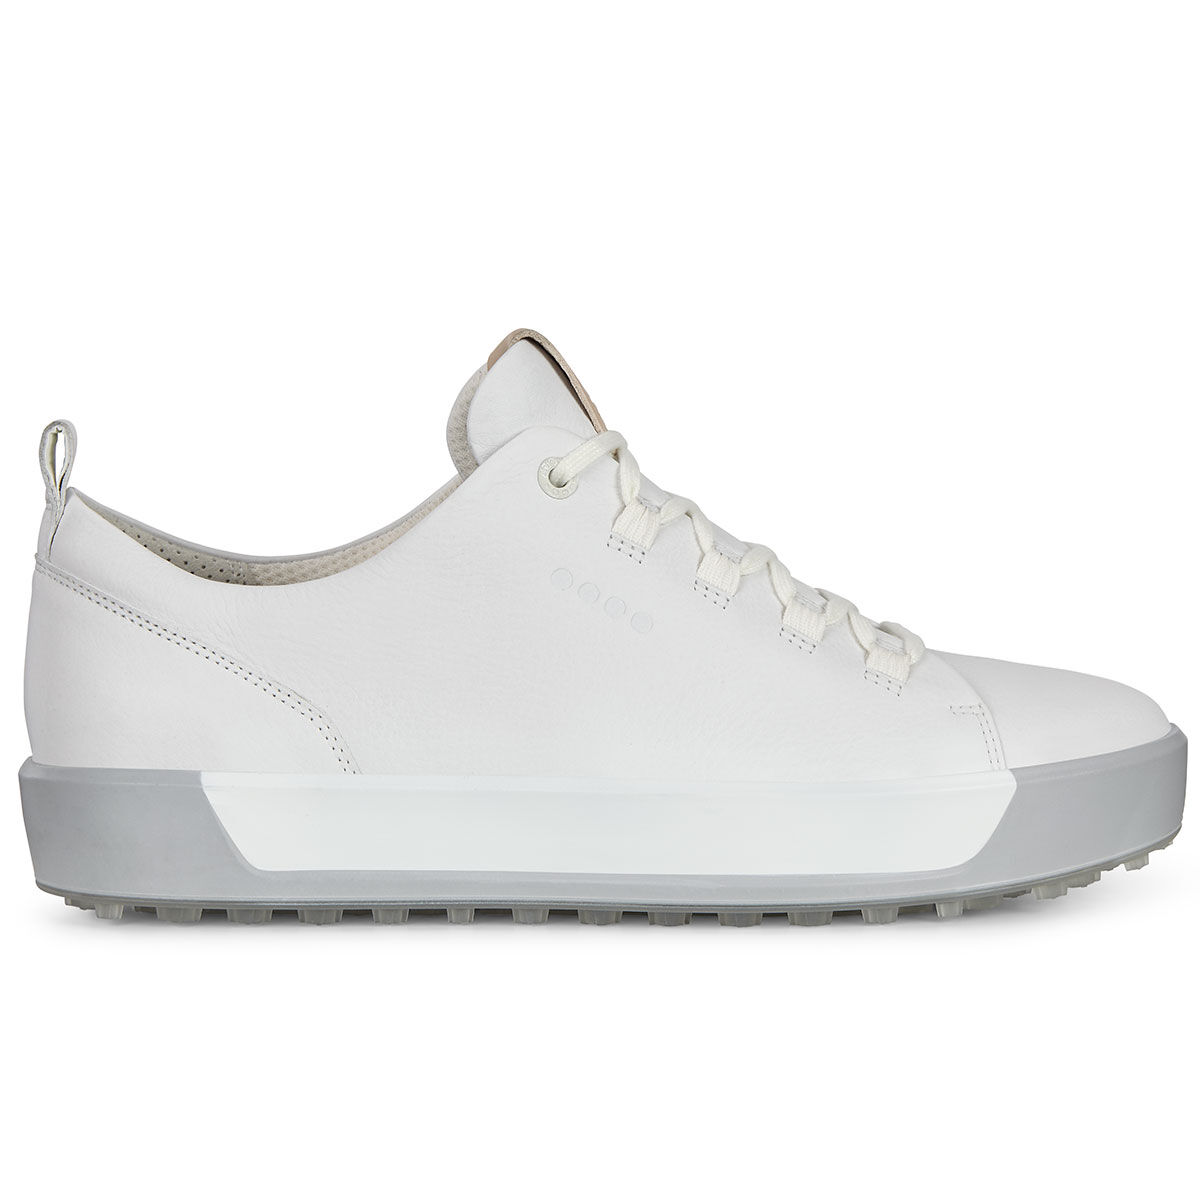 Chaussures ECCO Golf SOFT, homme, 7.5, Blanc Titane, Normal | Online Golf